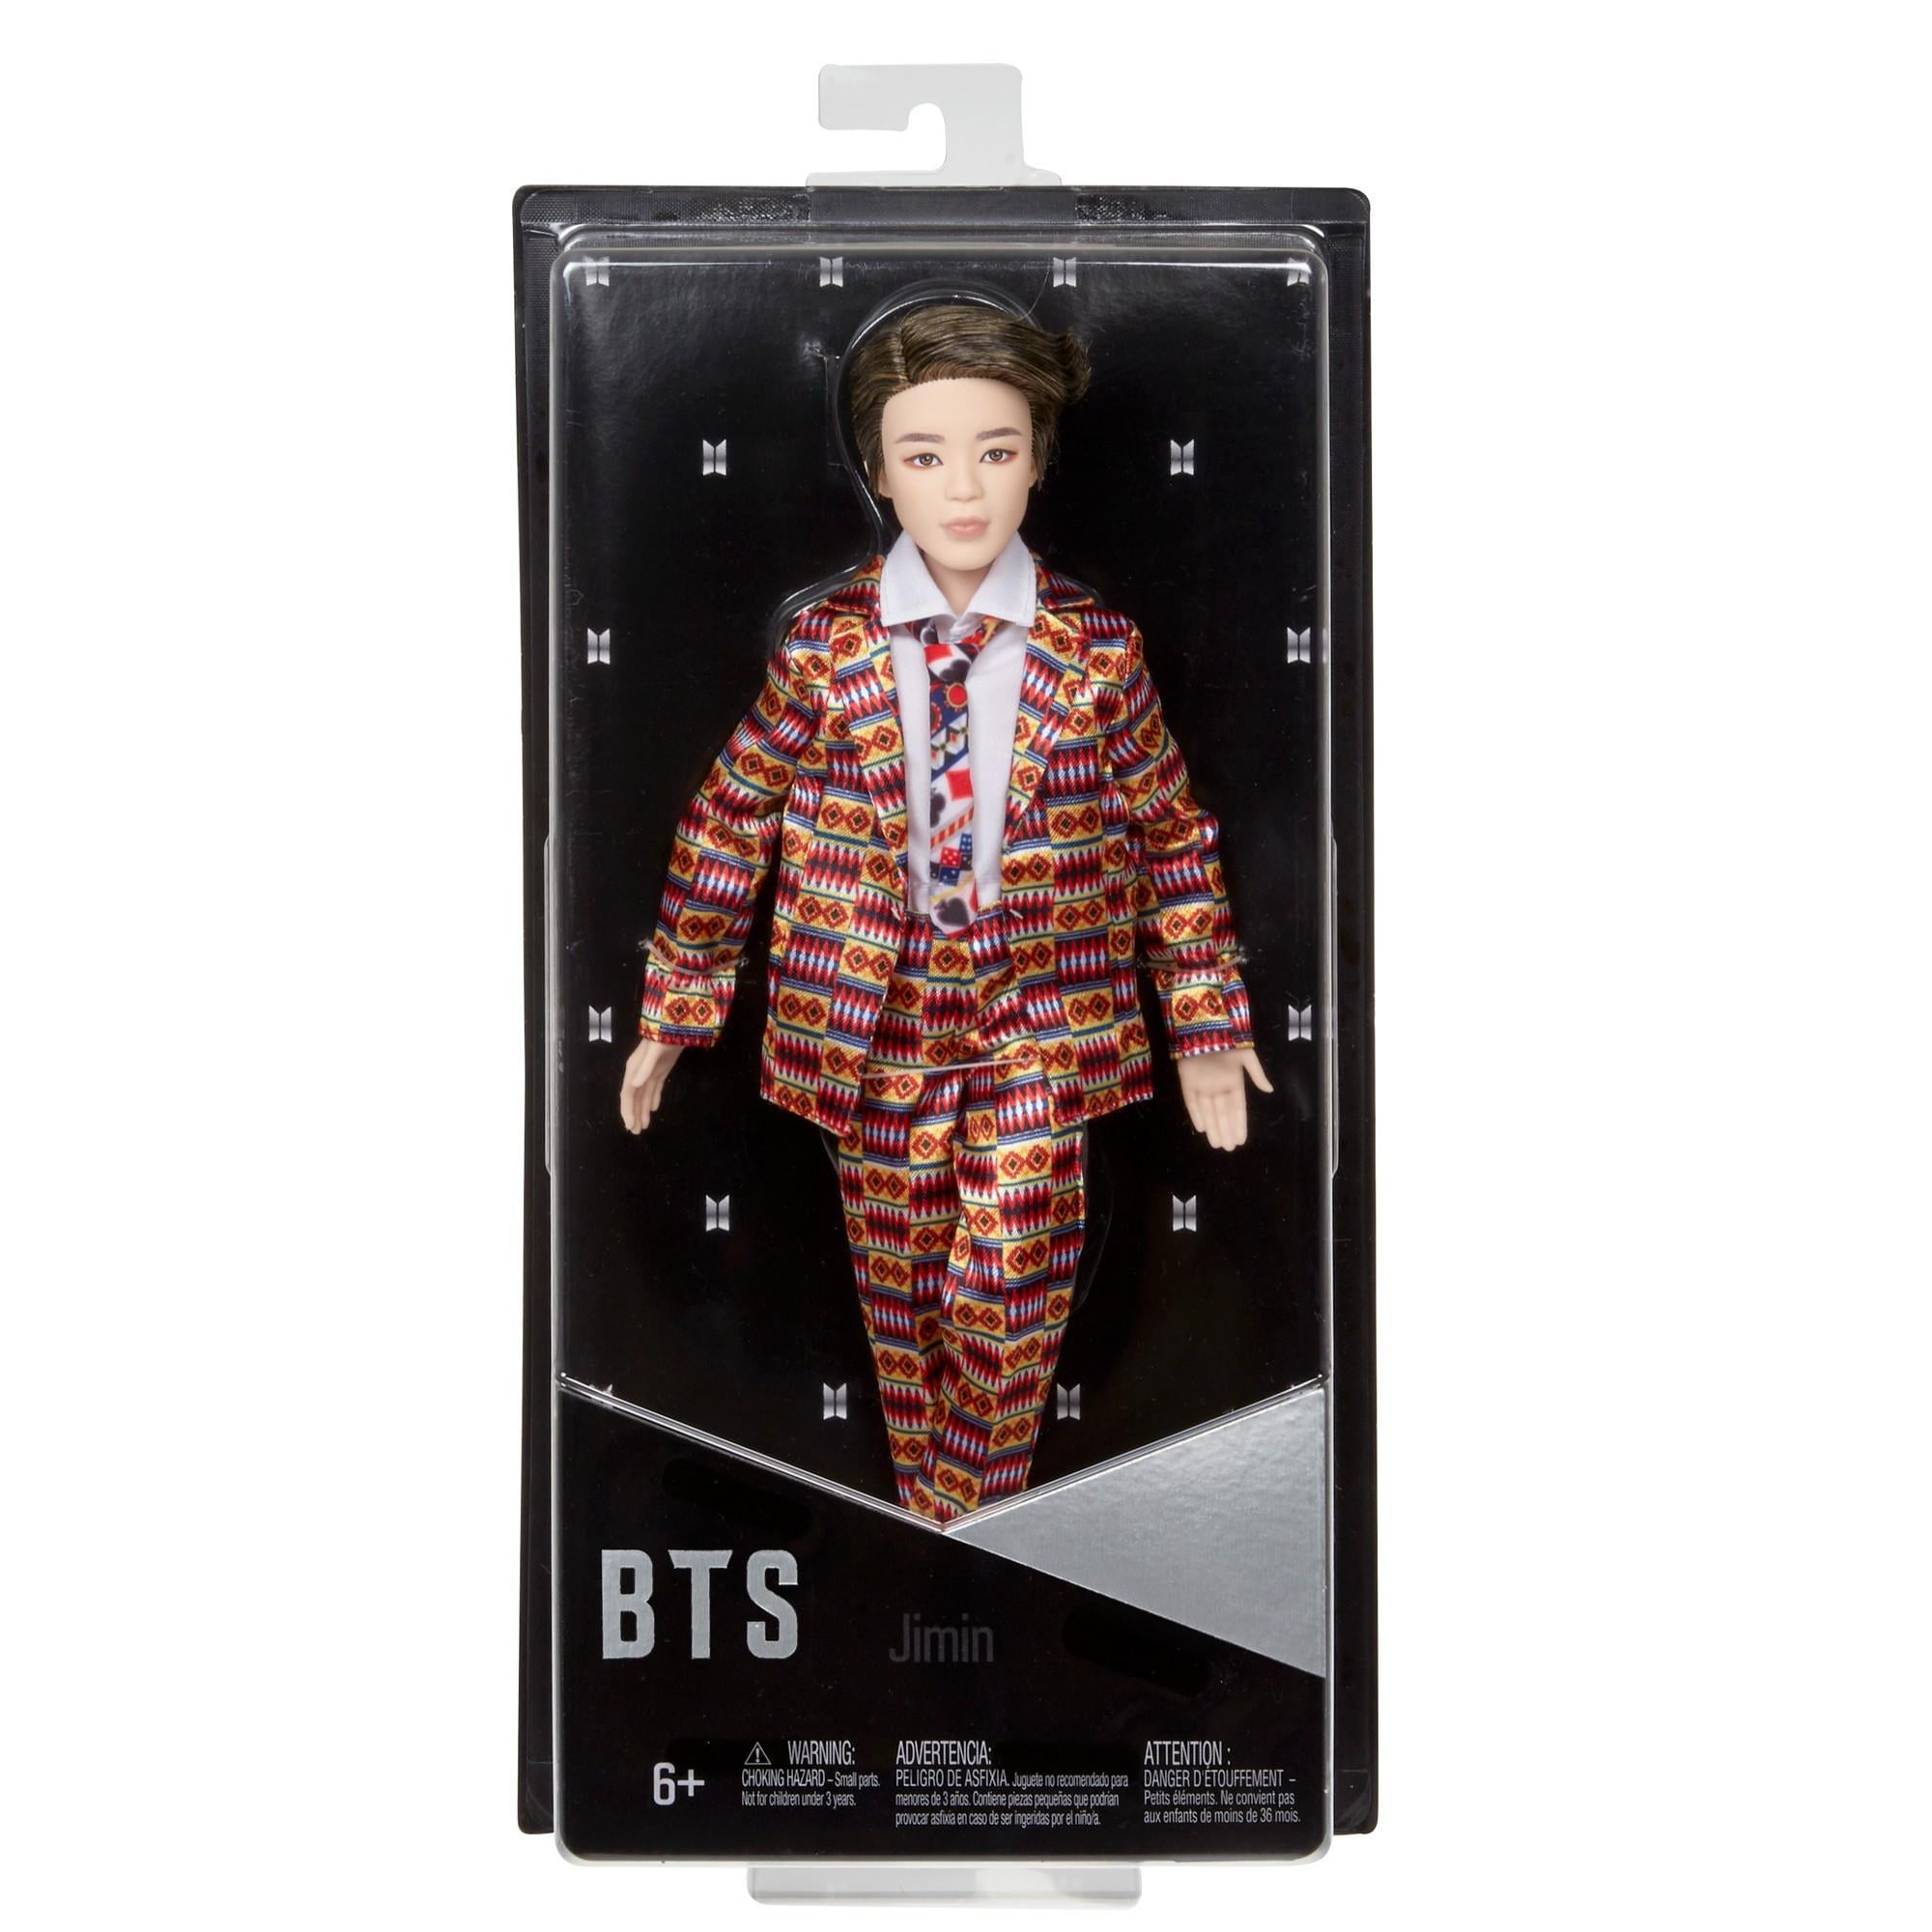 BTS x Mattel JIMIN Fashion Doll GKC93 Box damaged 